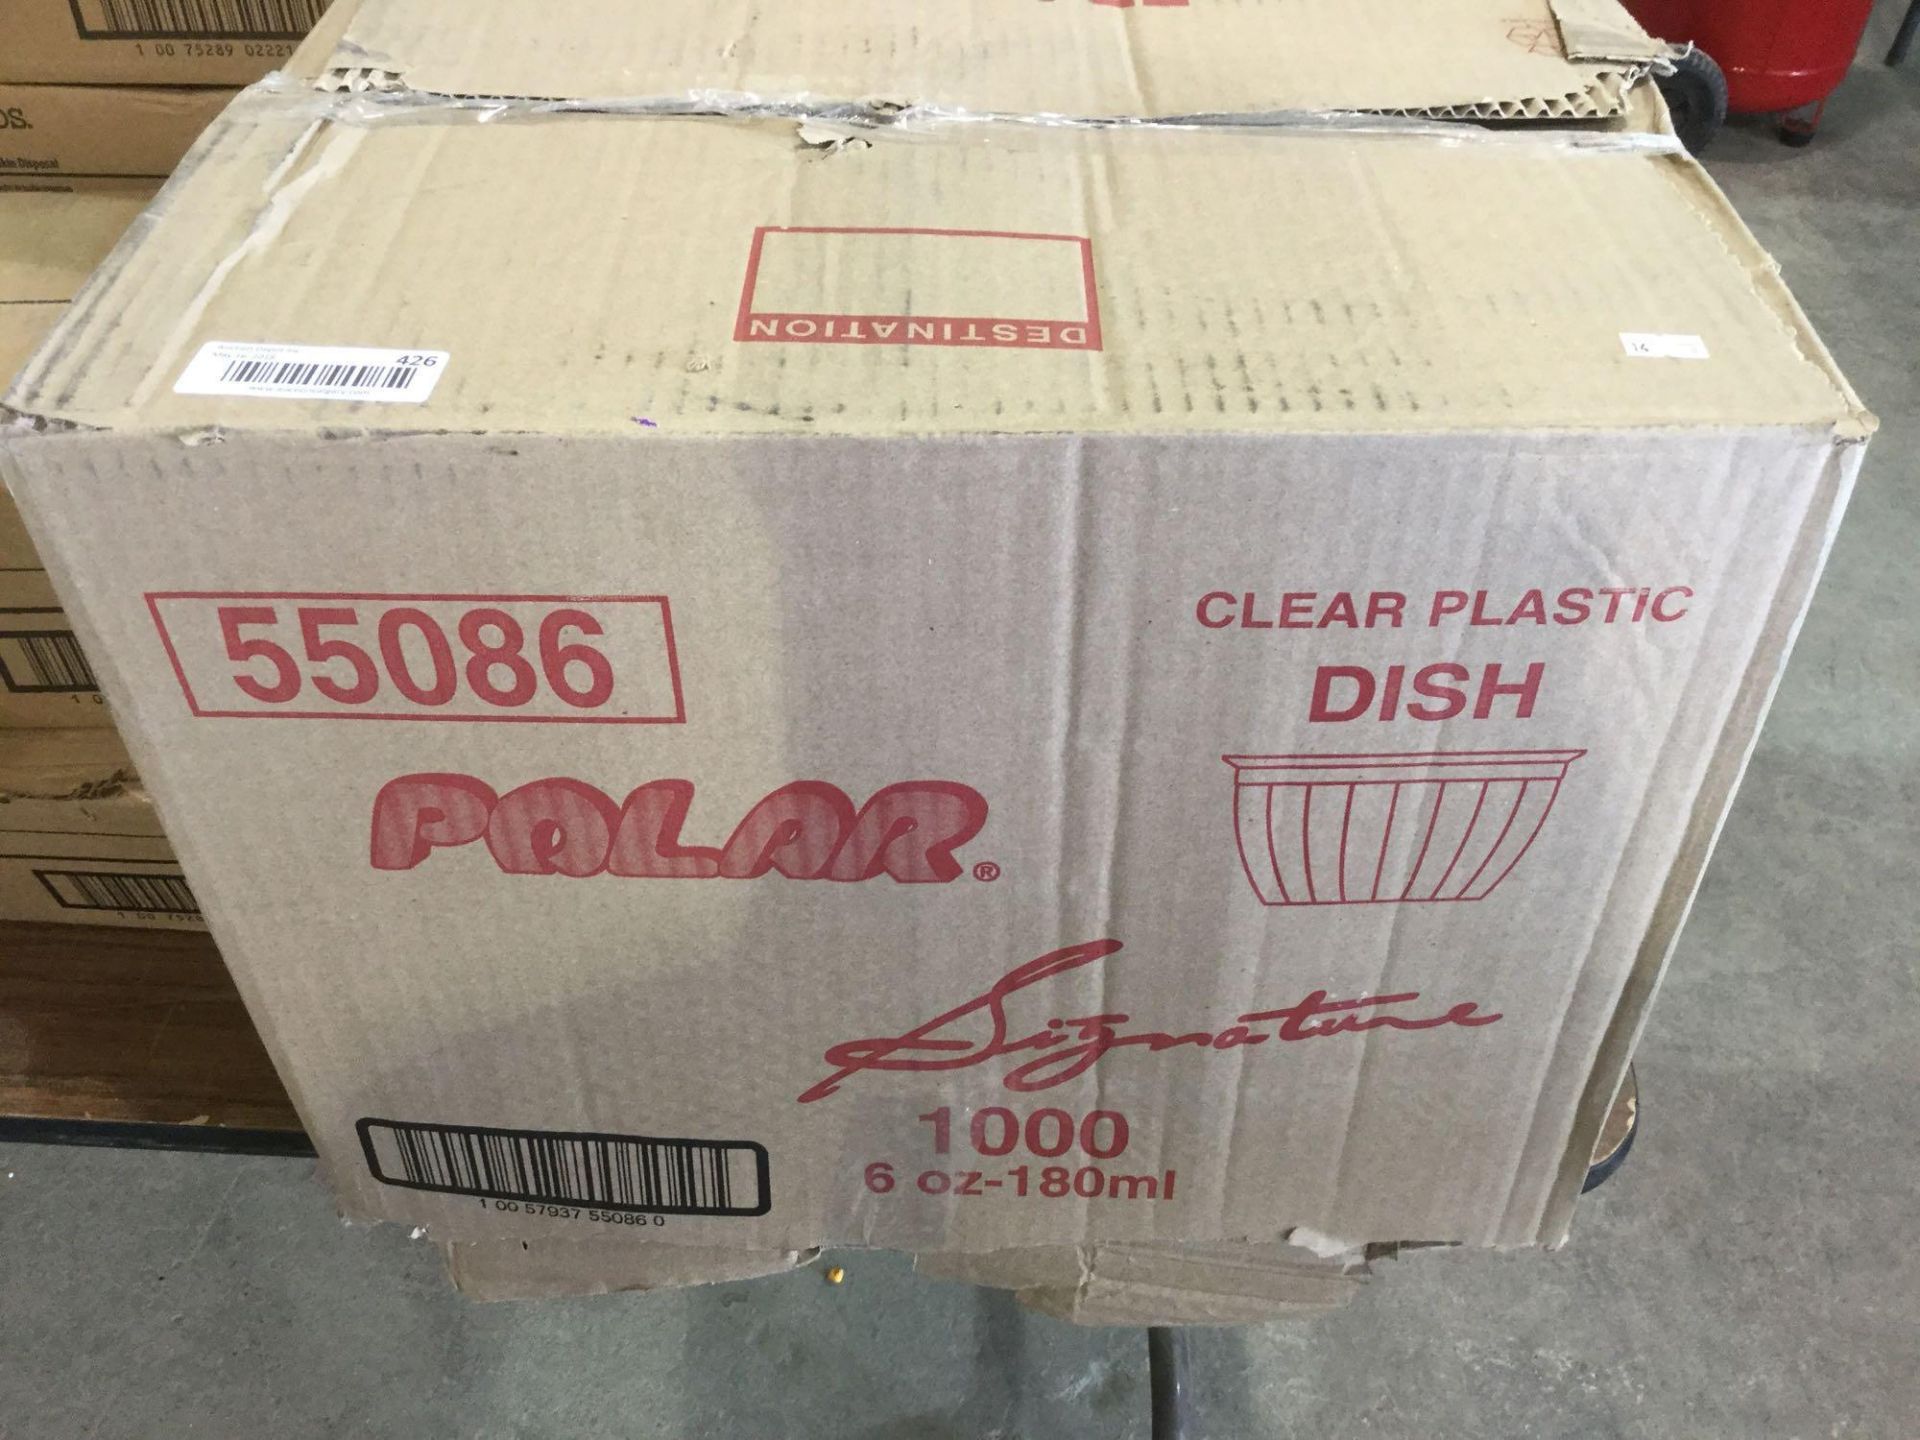 Case of Polar Clear Plastic Dish 6 oz (1000 Count)